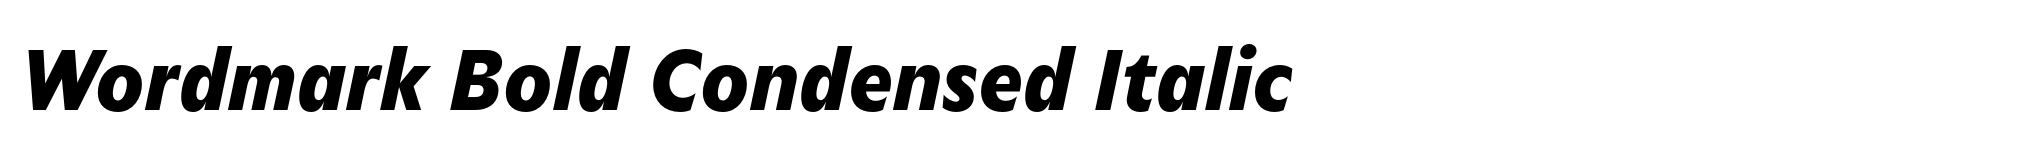 Wordmark Bold Condensed Italic image